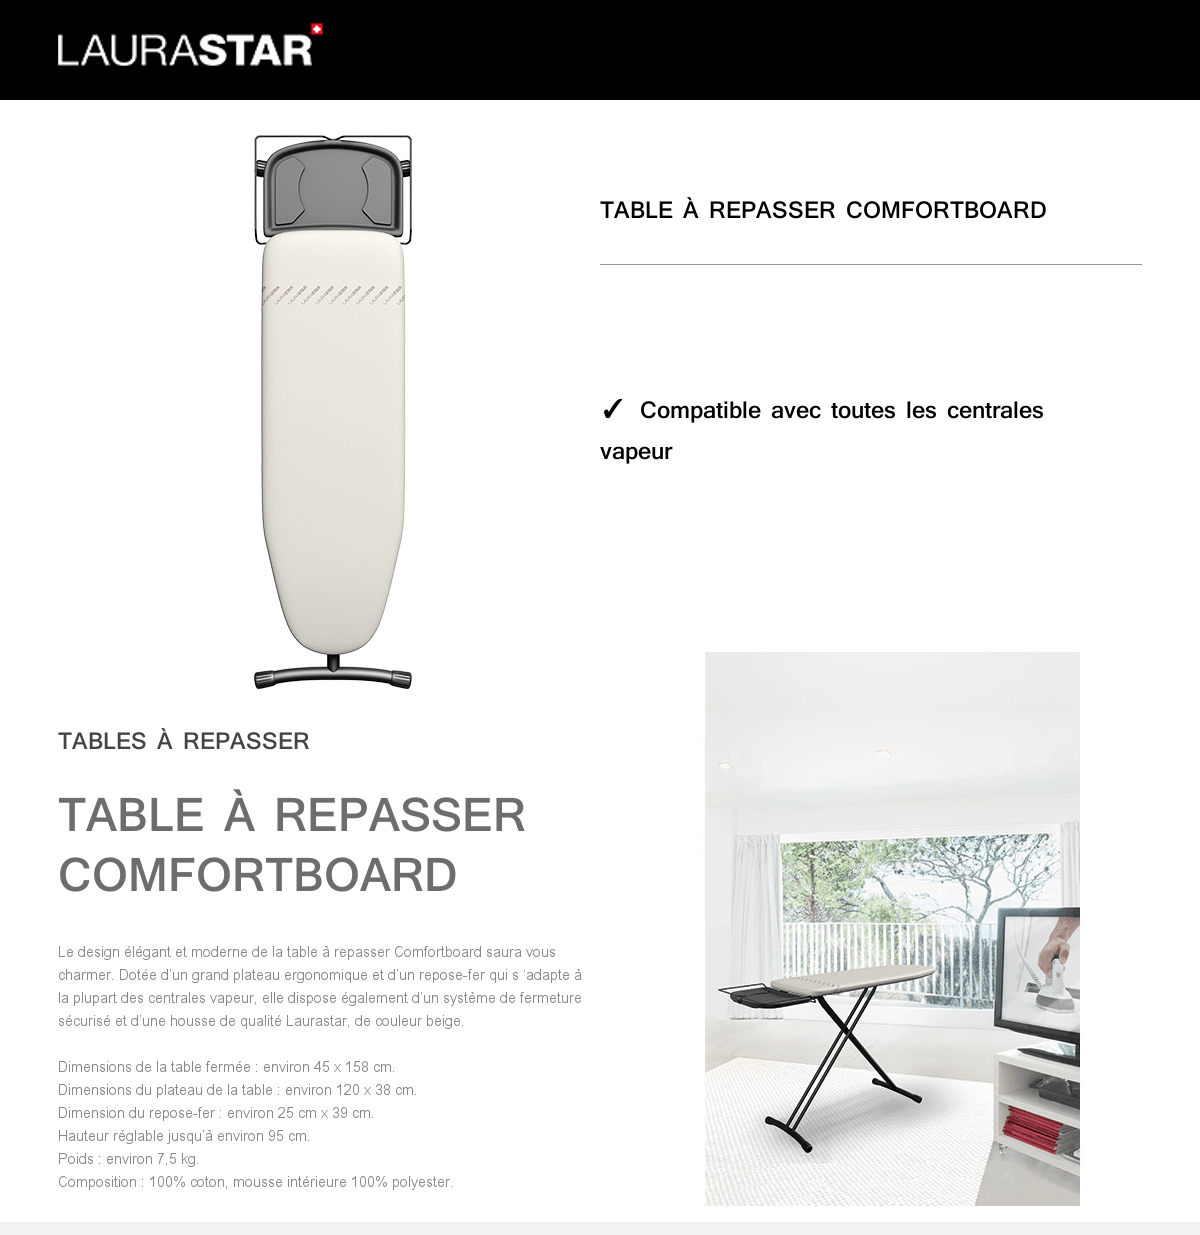 laurastar table a repasser comfortboard